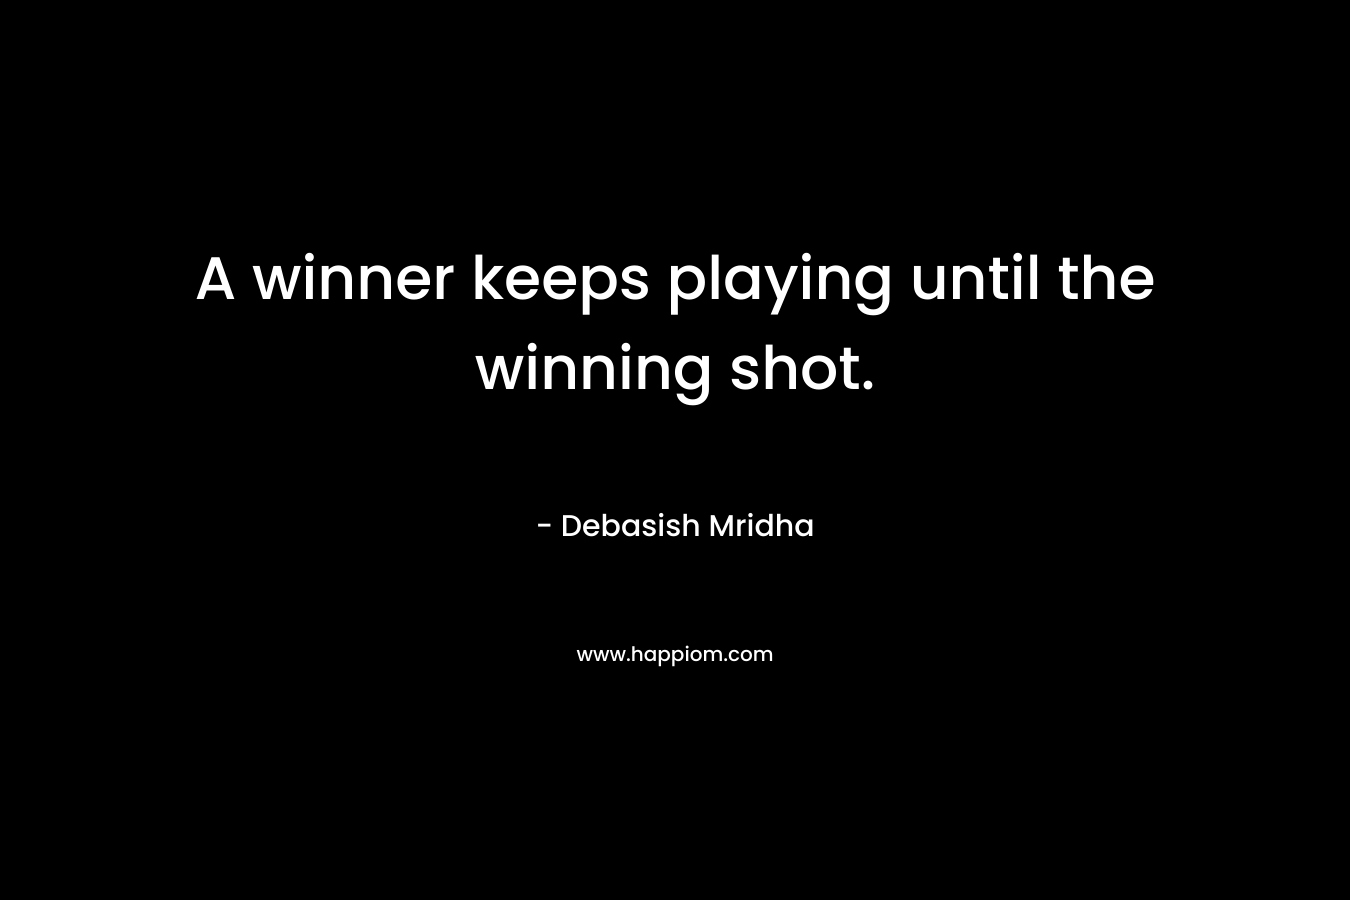 A winner keeps playing until the winning shot.